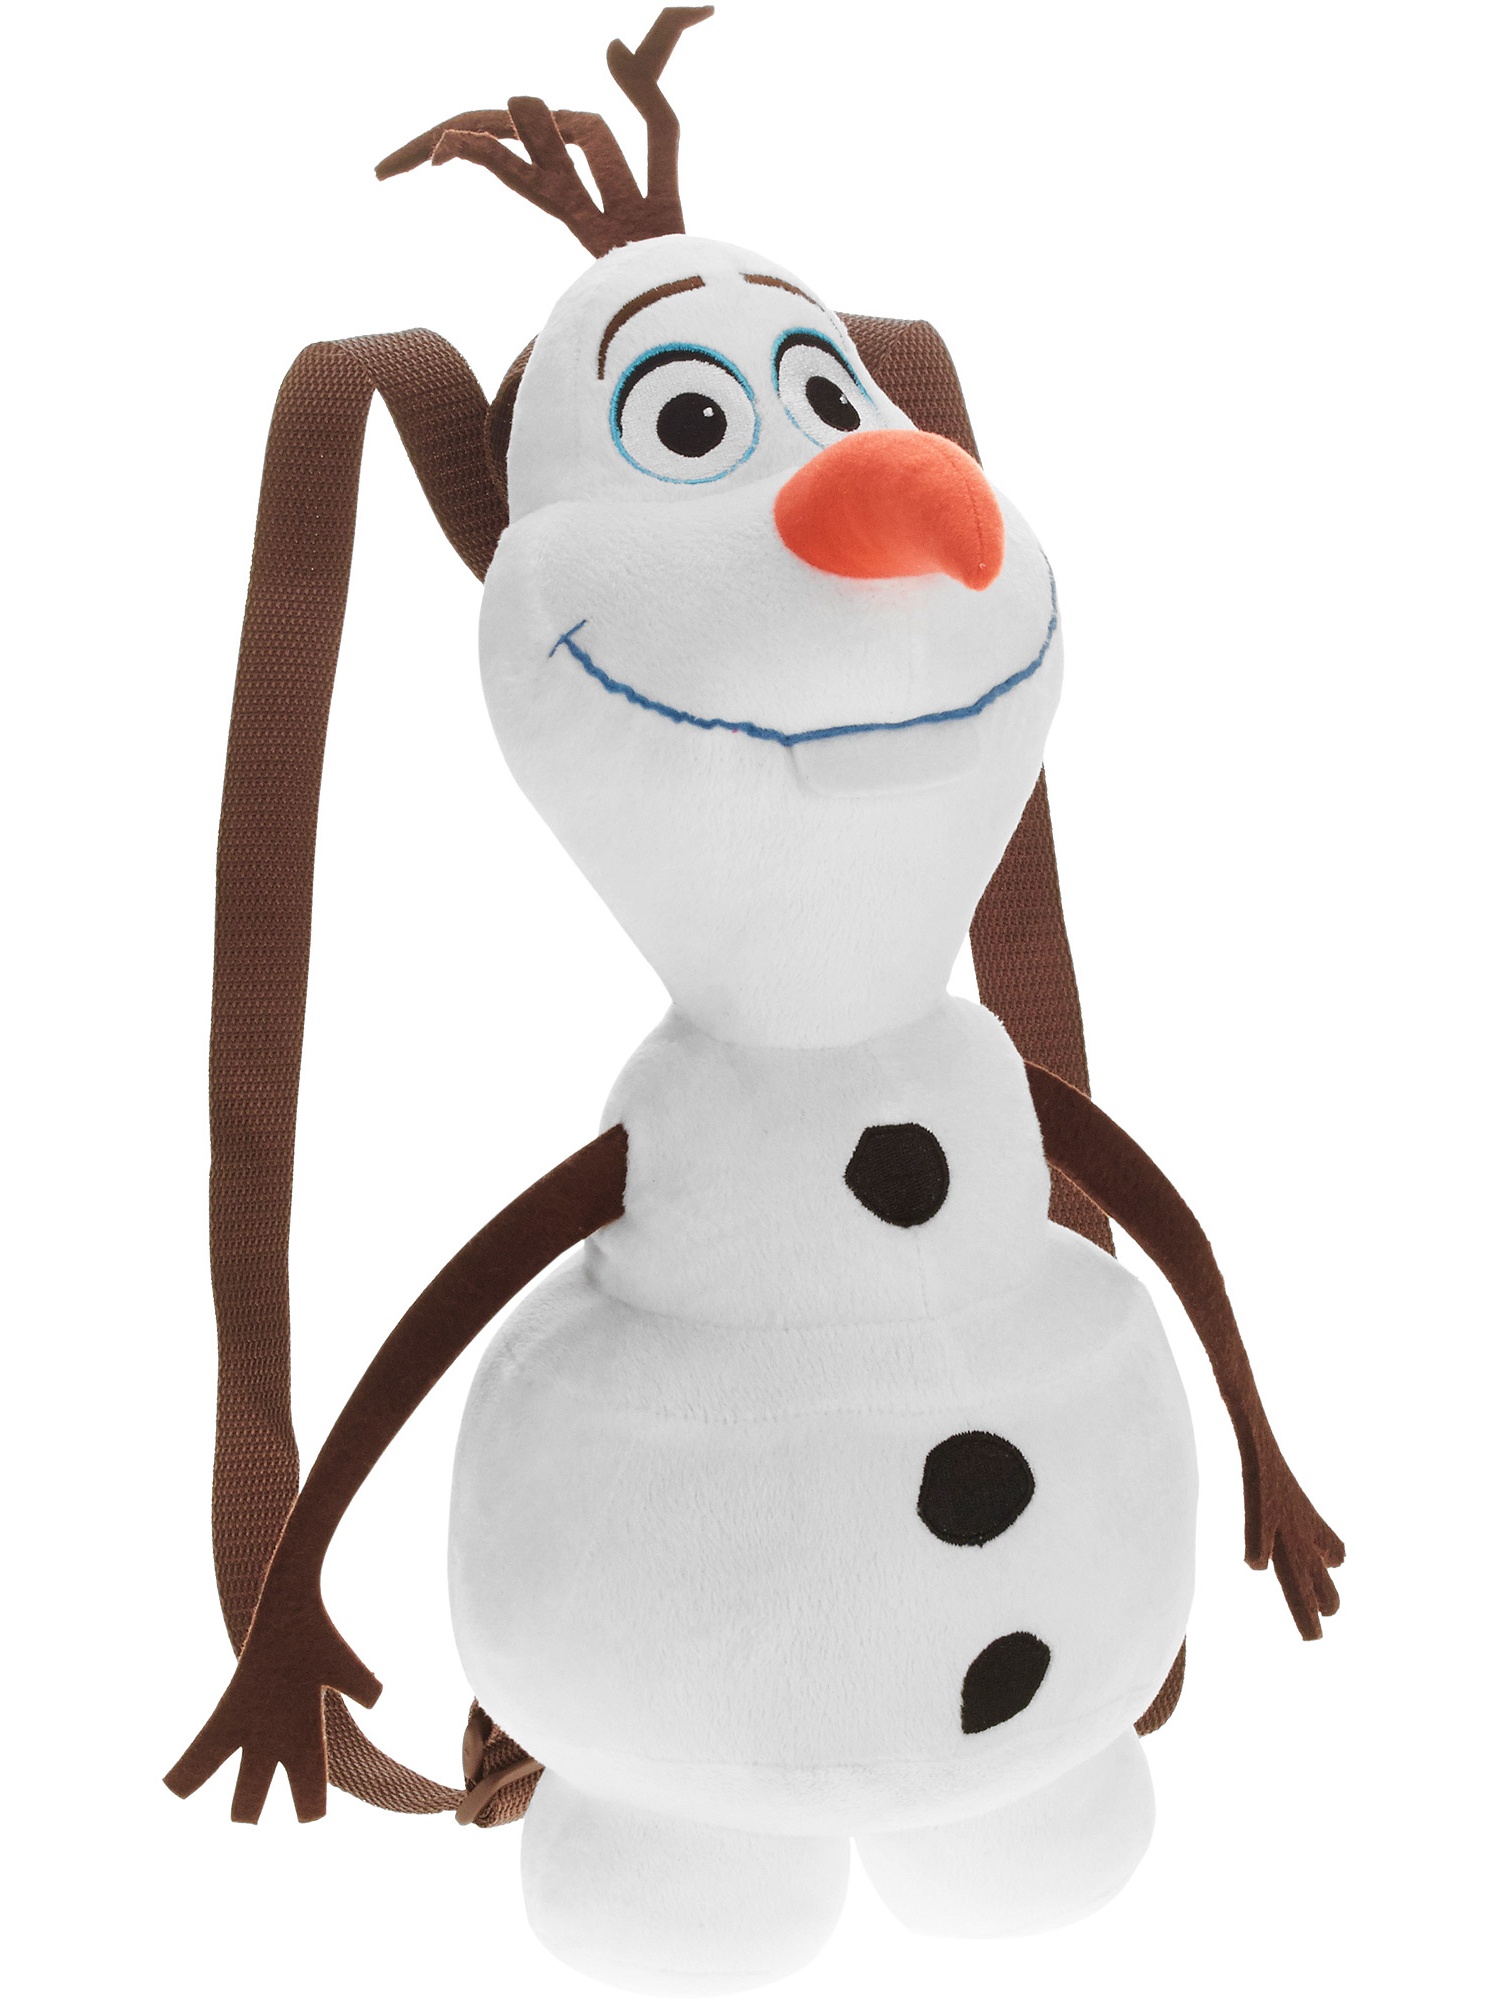 Disney Frozen Olaf Plush Backpack - image 1 of 3